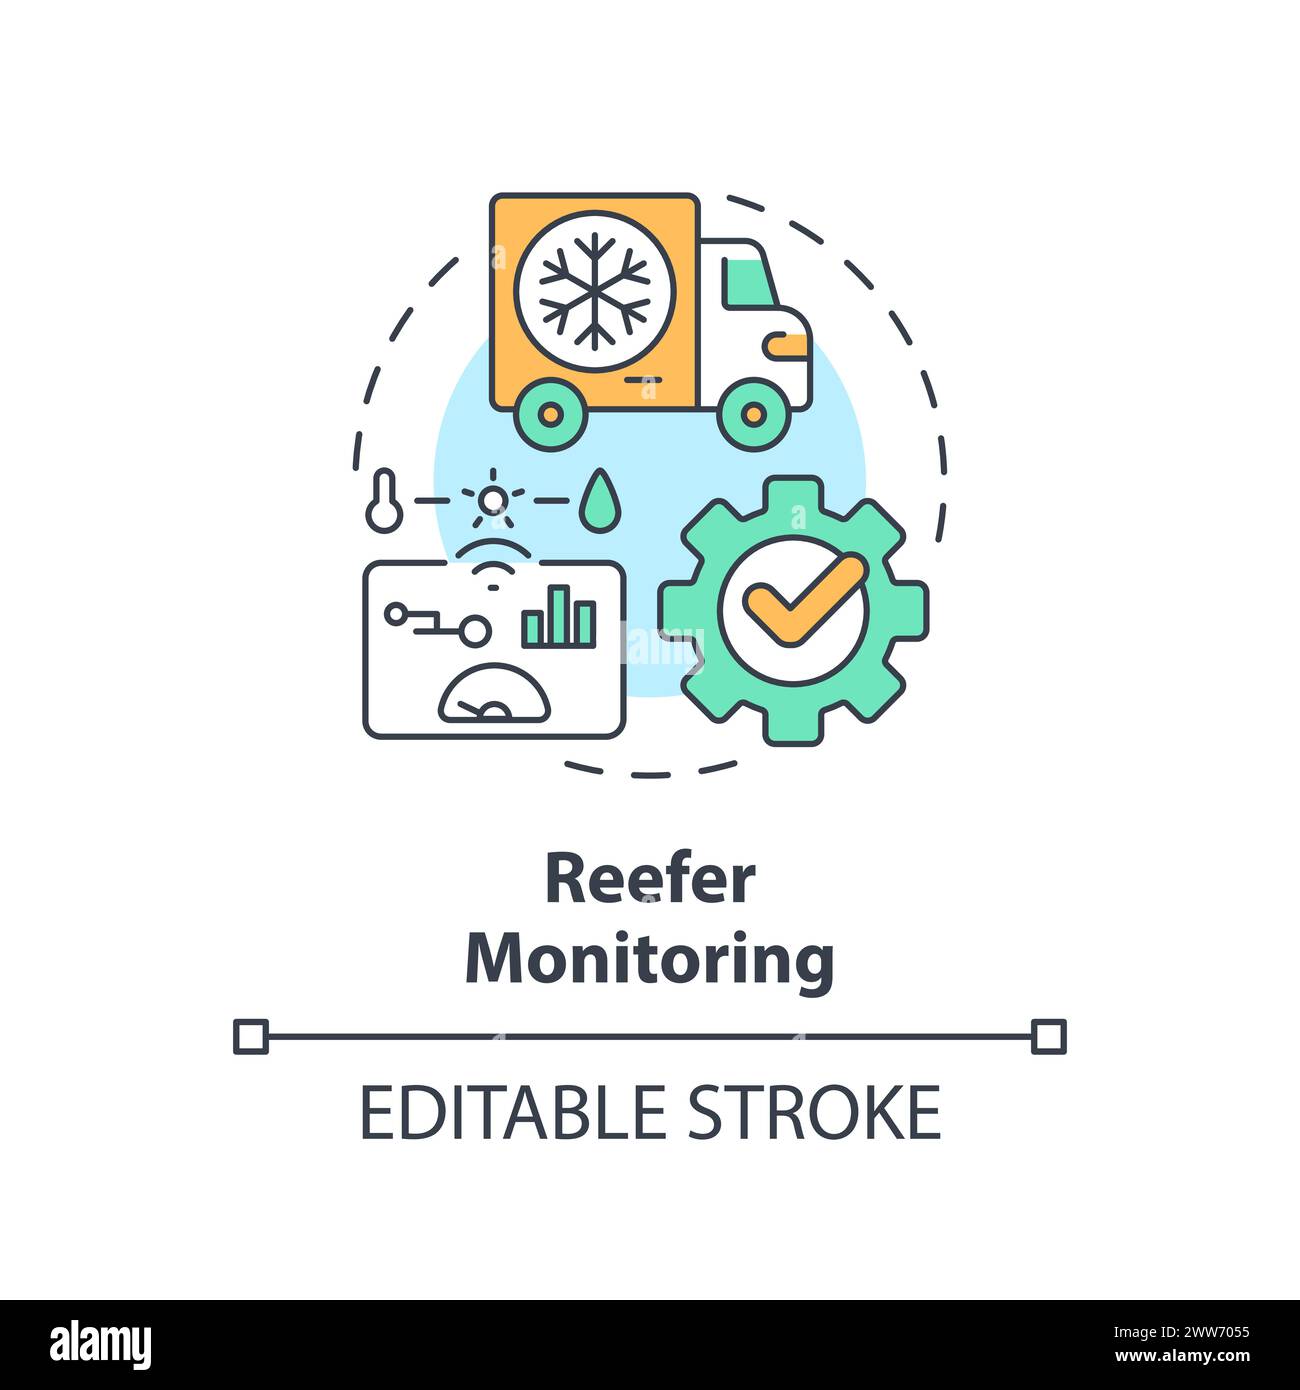 Reefer monitoring multi color concept icon Stock Vector